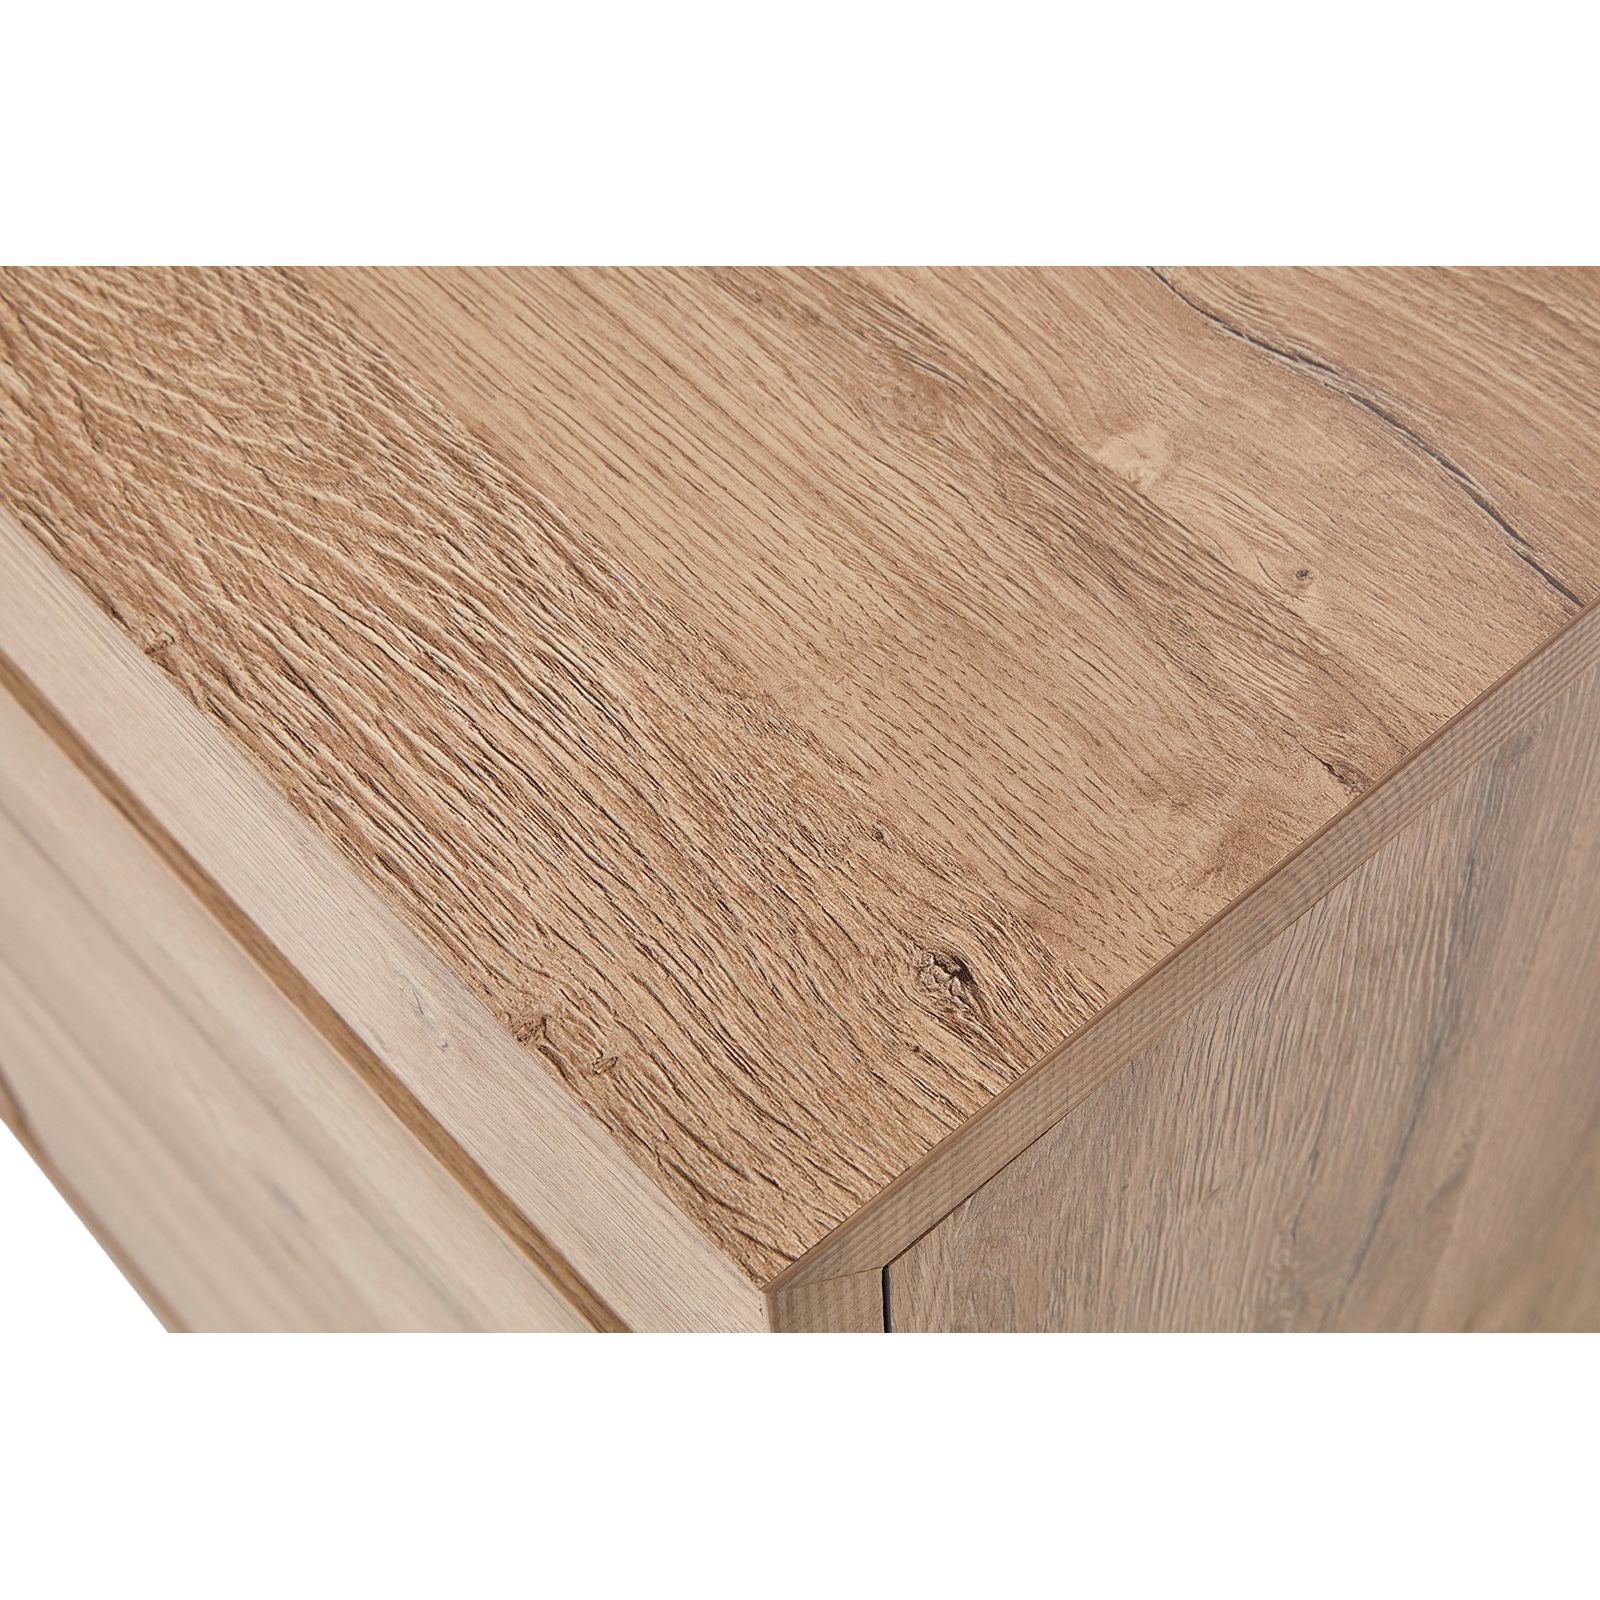 Dresser | Furniture series Talenso | natural, gray, brown | 248